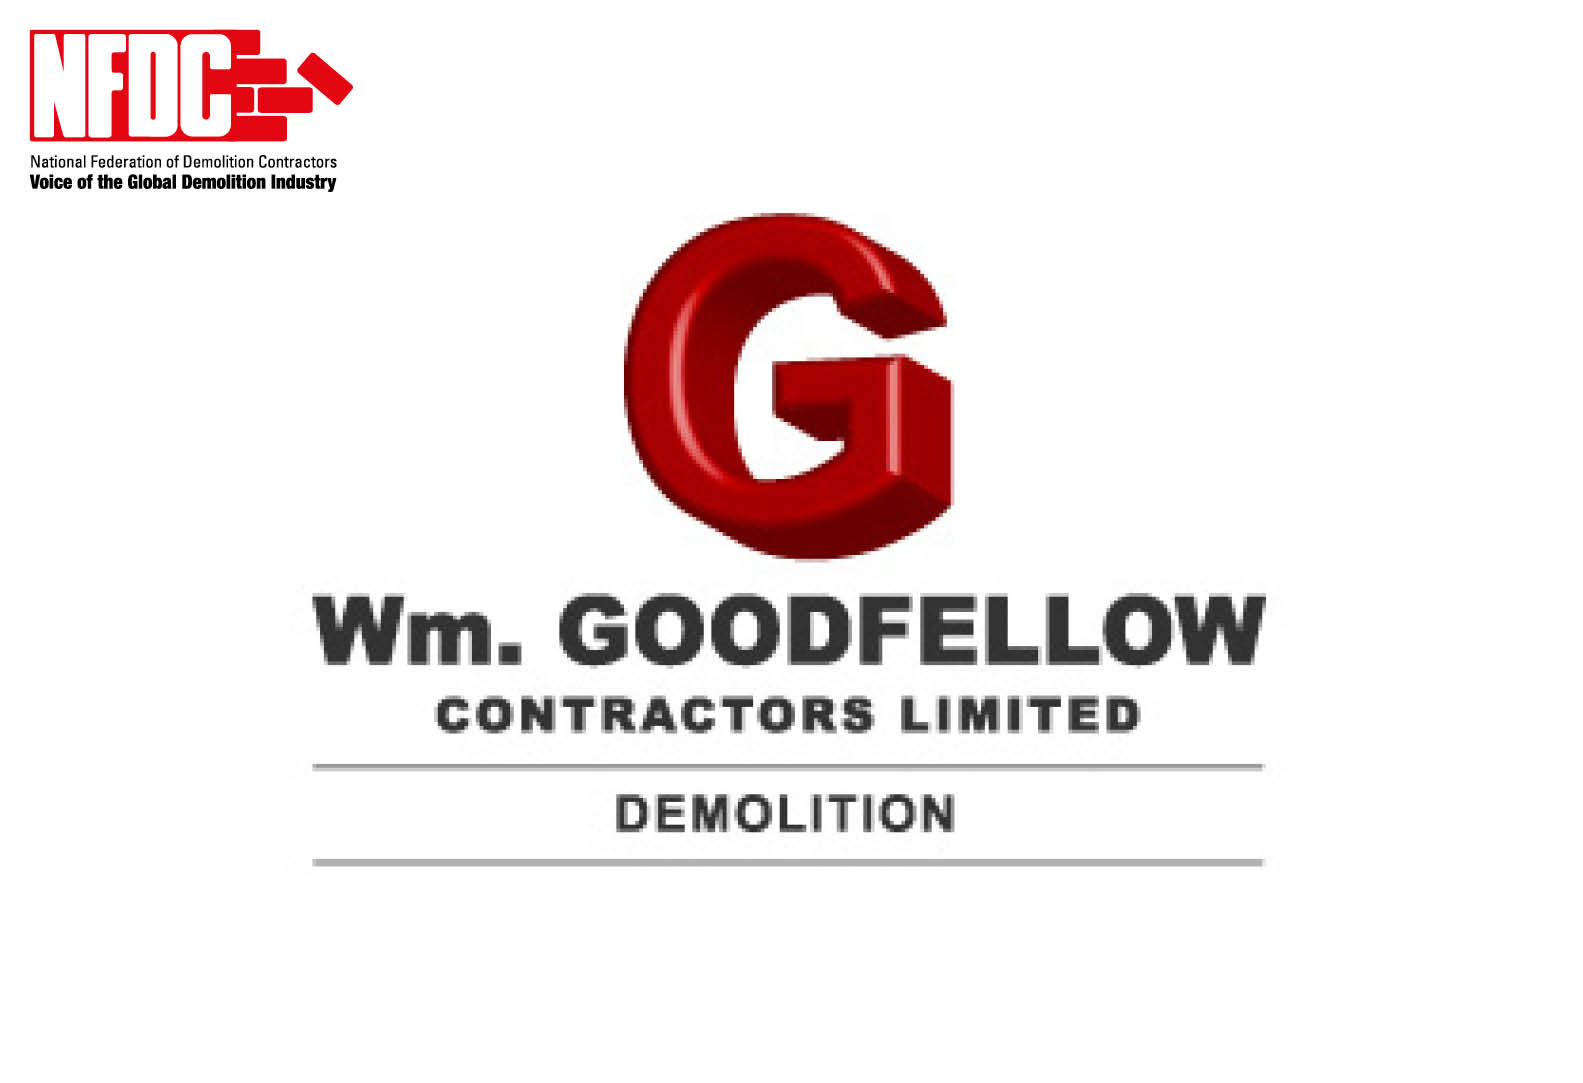 William Goodfellow (Contractors) Ltd